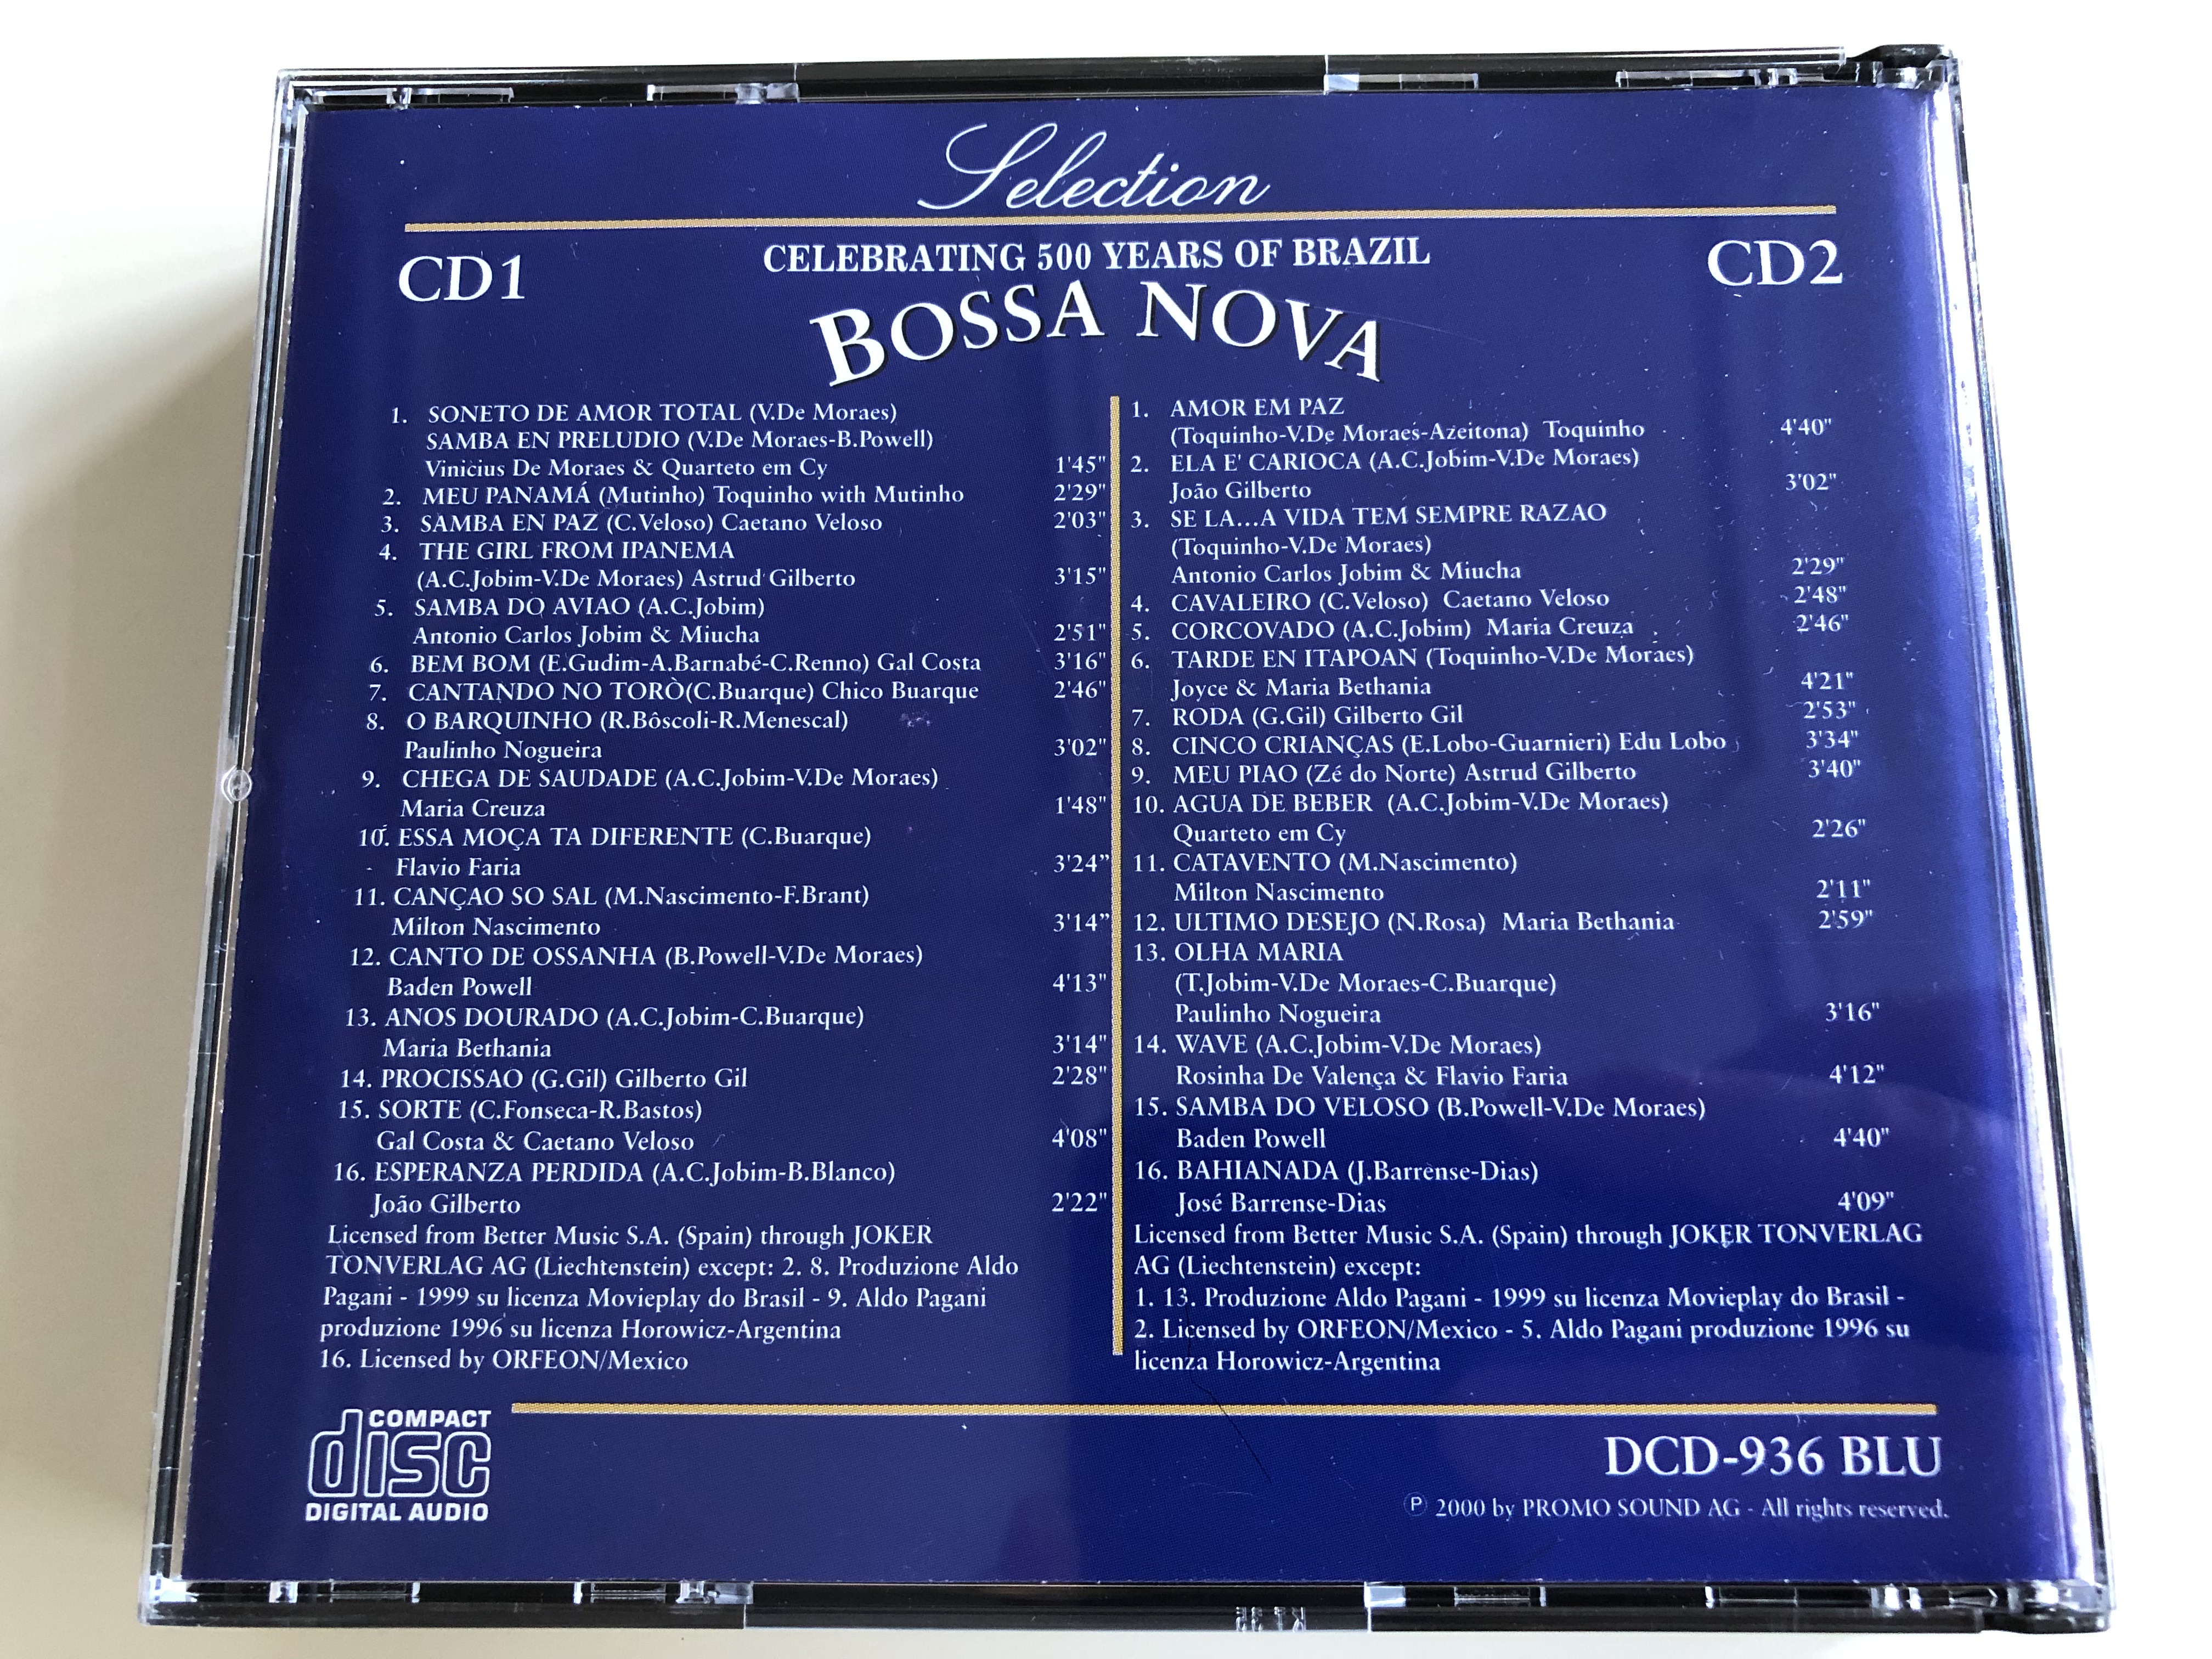 bossa-nova-selection-celebrating-500-years-of-brazil-antonio-carlos-jobim-caetano-veloso-joao-astrud-gilberto-joyce-gilberto-gil-gal-costa-flavio-faria-jos-barrense-dias-audio-cd-2000-dcd-936-blu-2-cd-3538998-.jpg